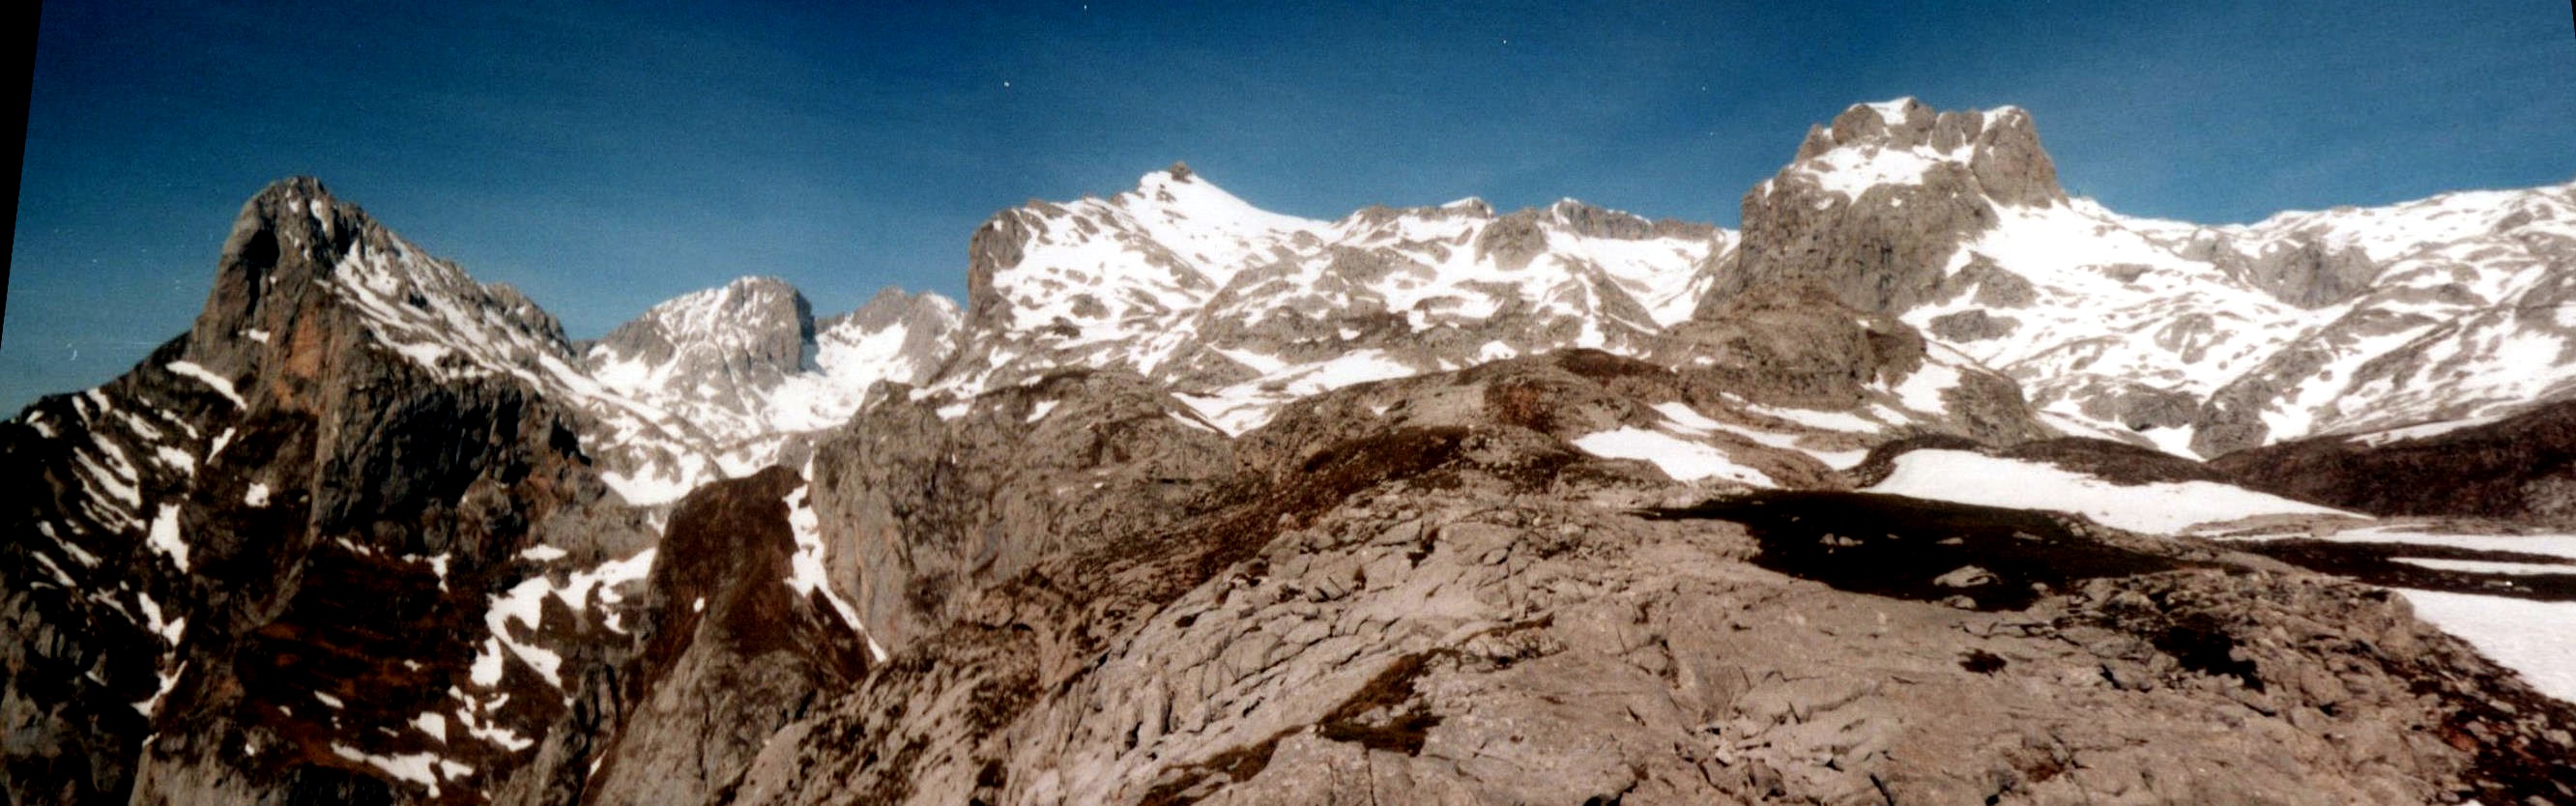 Panorama from Pena de Remona, Picos de Europa